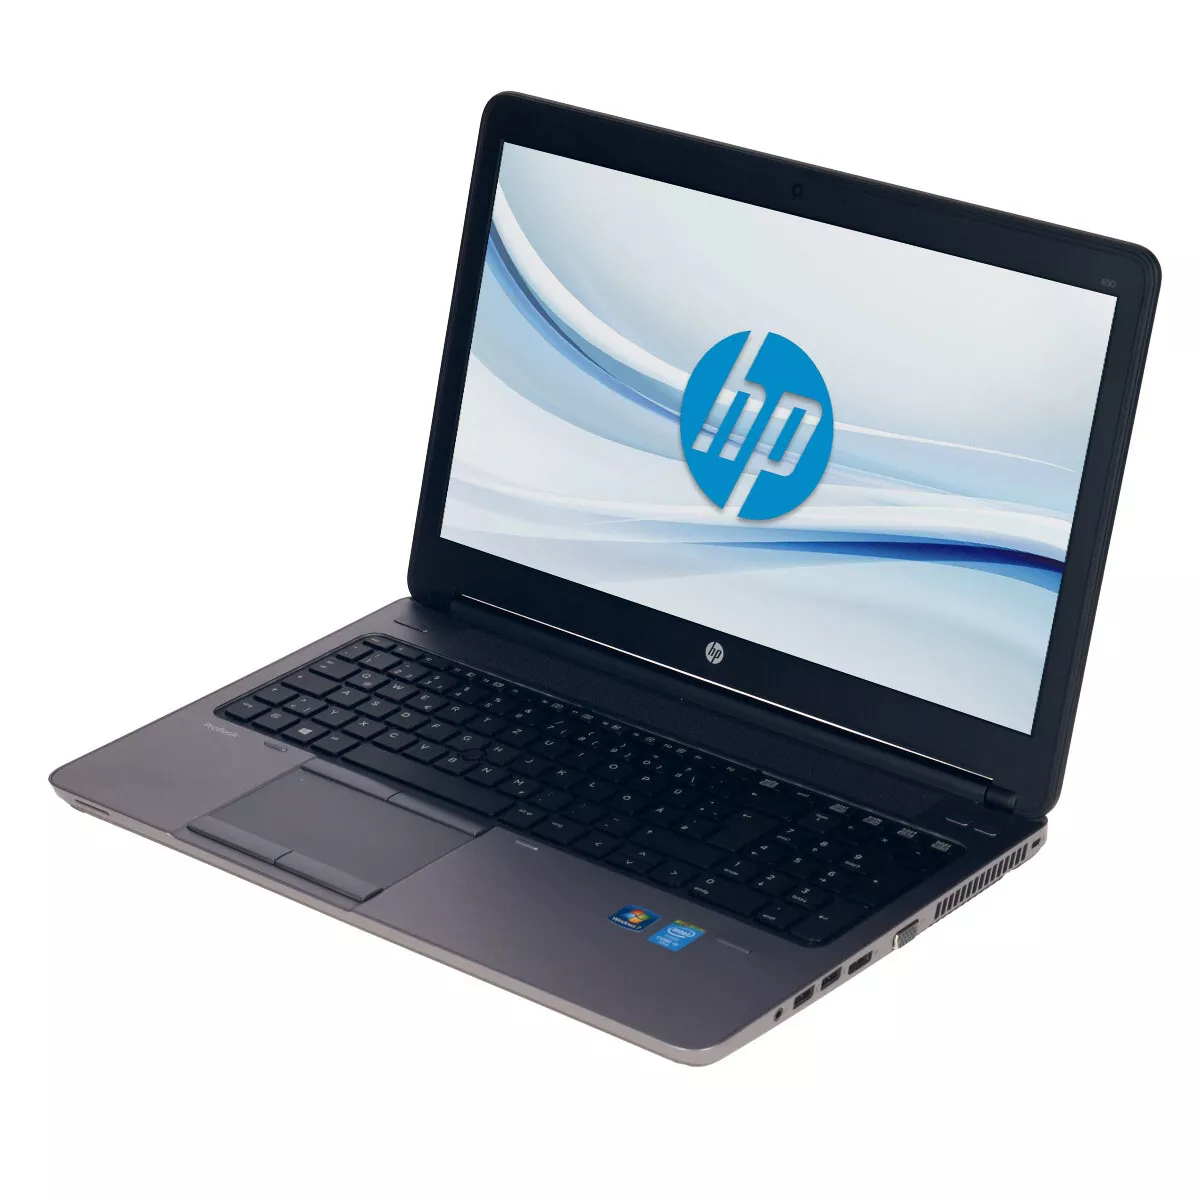 HP ProBook 650 G1 Core i5 4310M 2,7 GHz 8 GB 128 GB Webcam